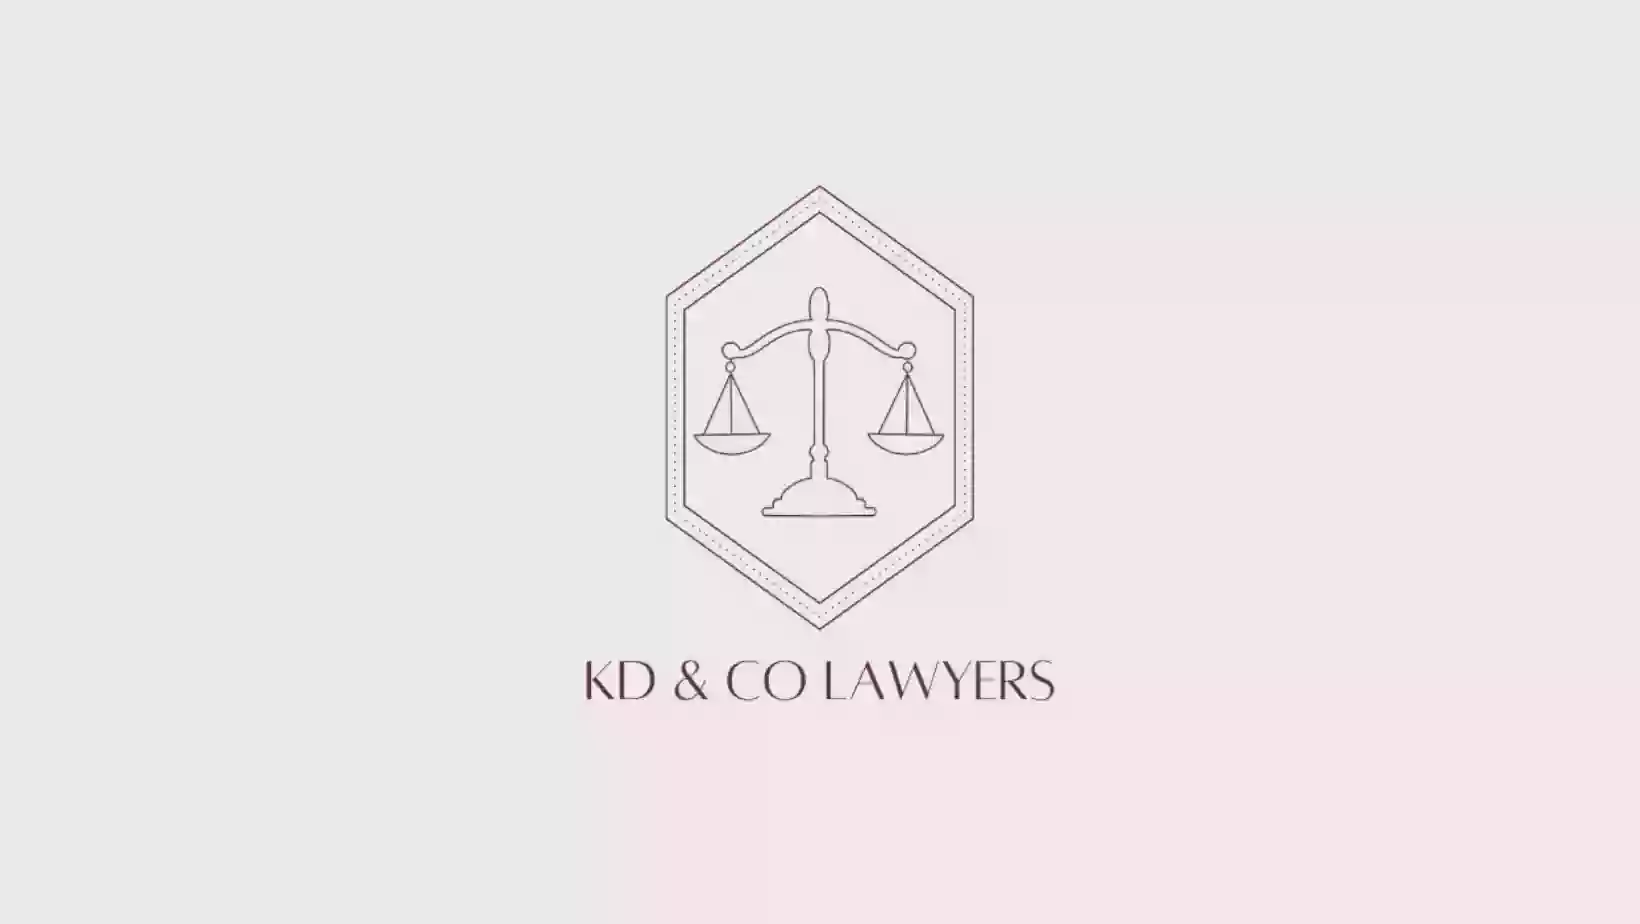 KD & Co Lawyers